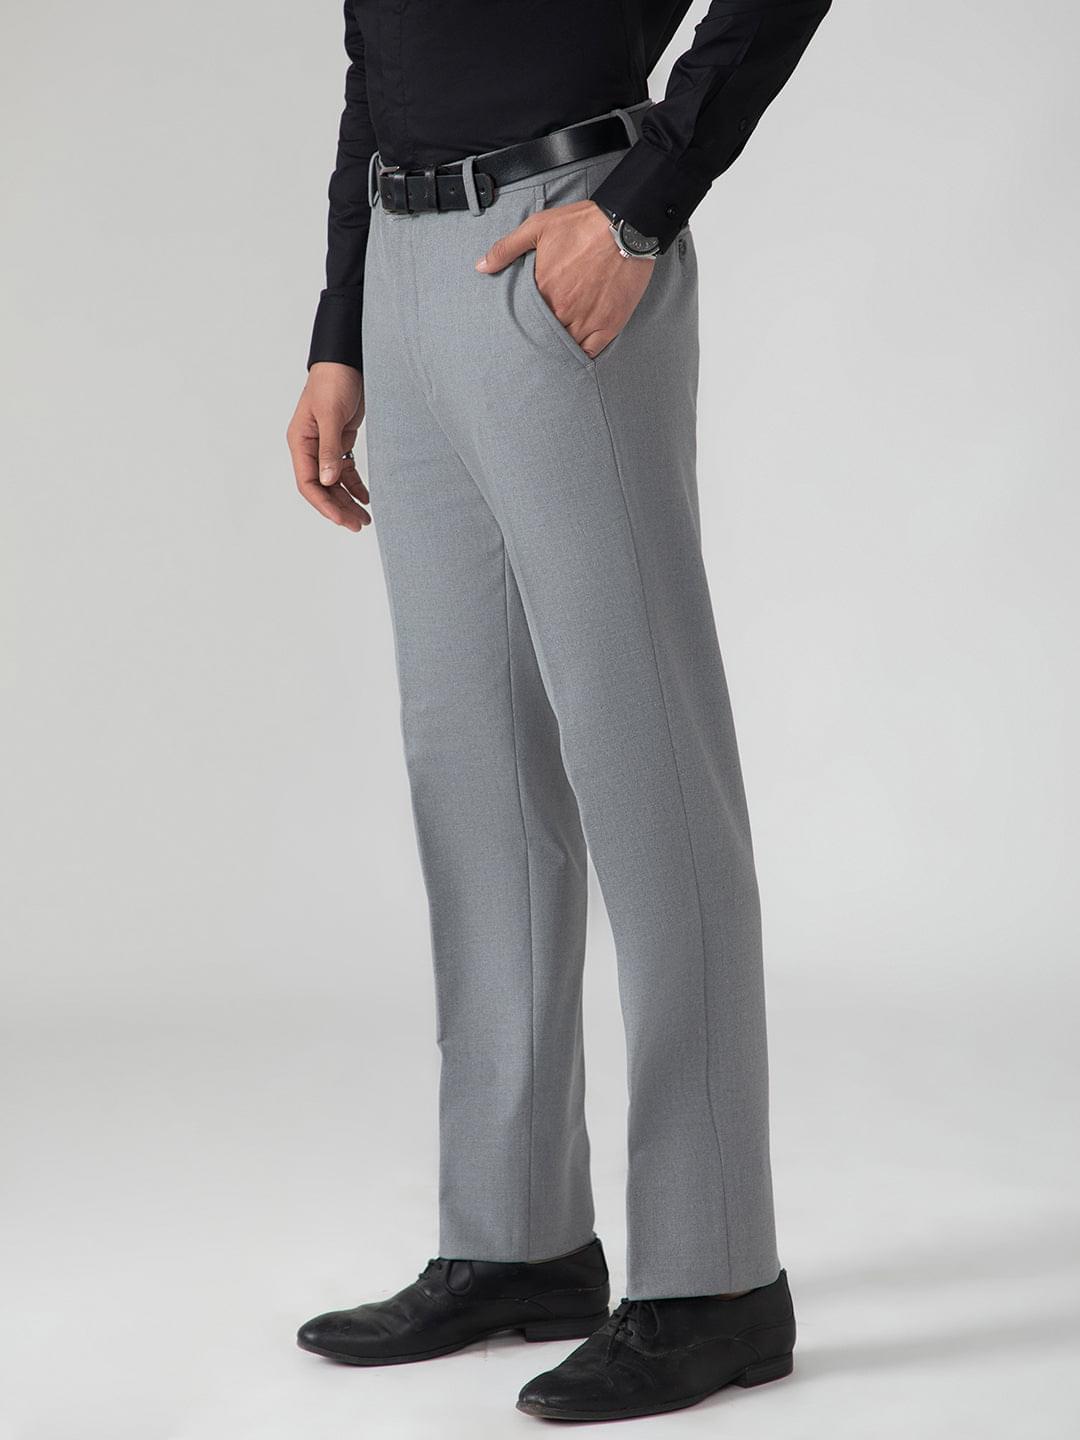 Buy Men Black Check Slim Fit Formal Trousers Online - 778352 | Peter England